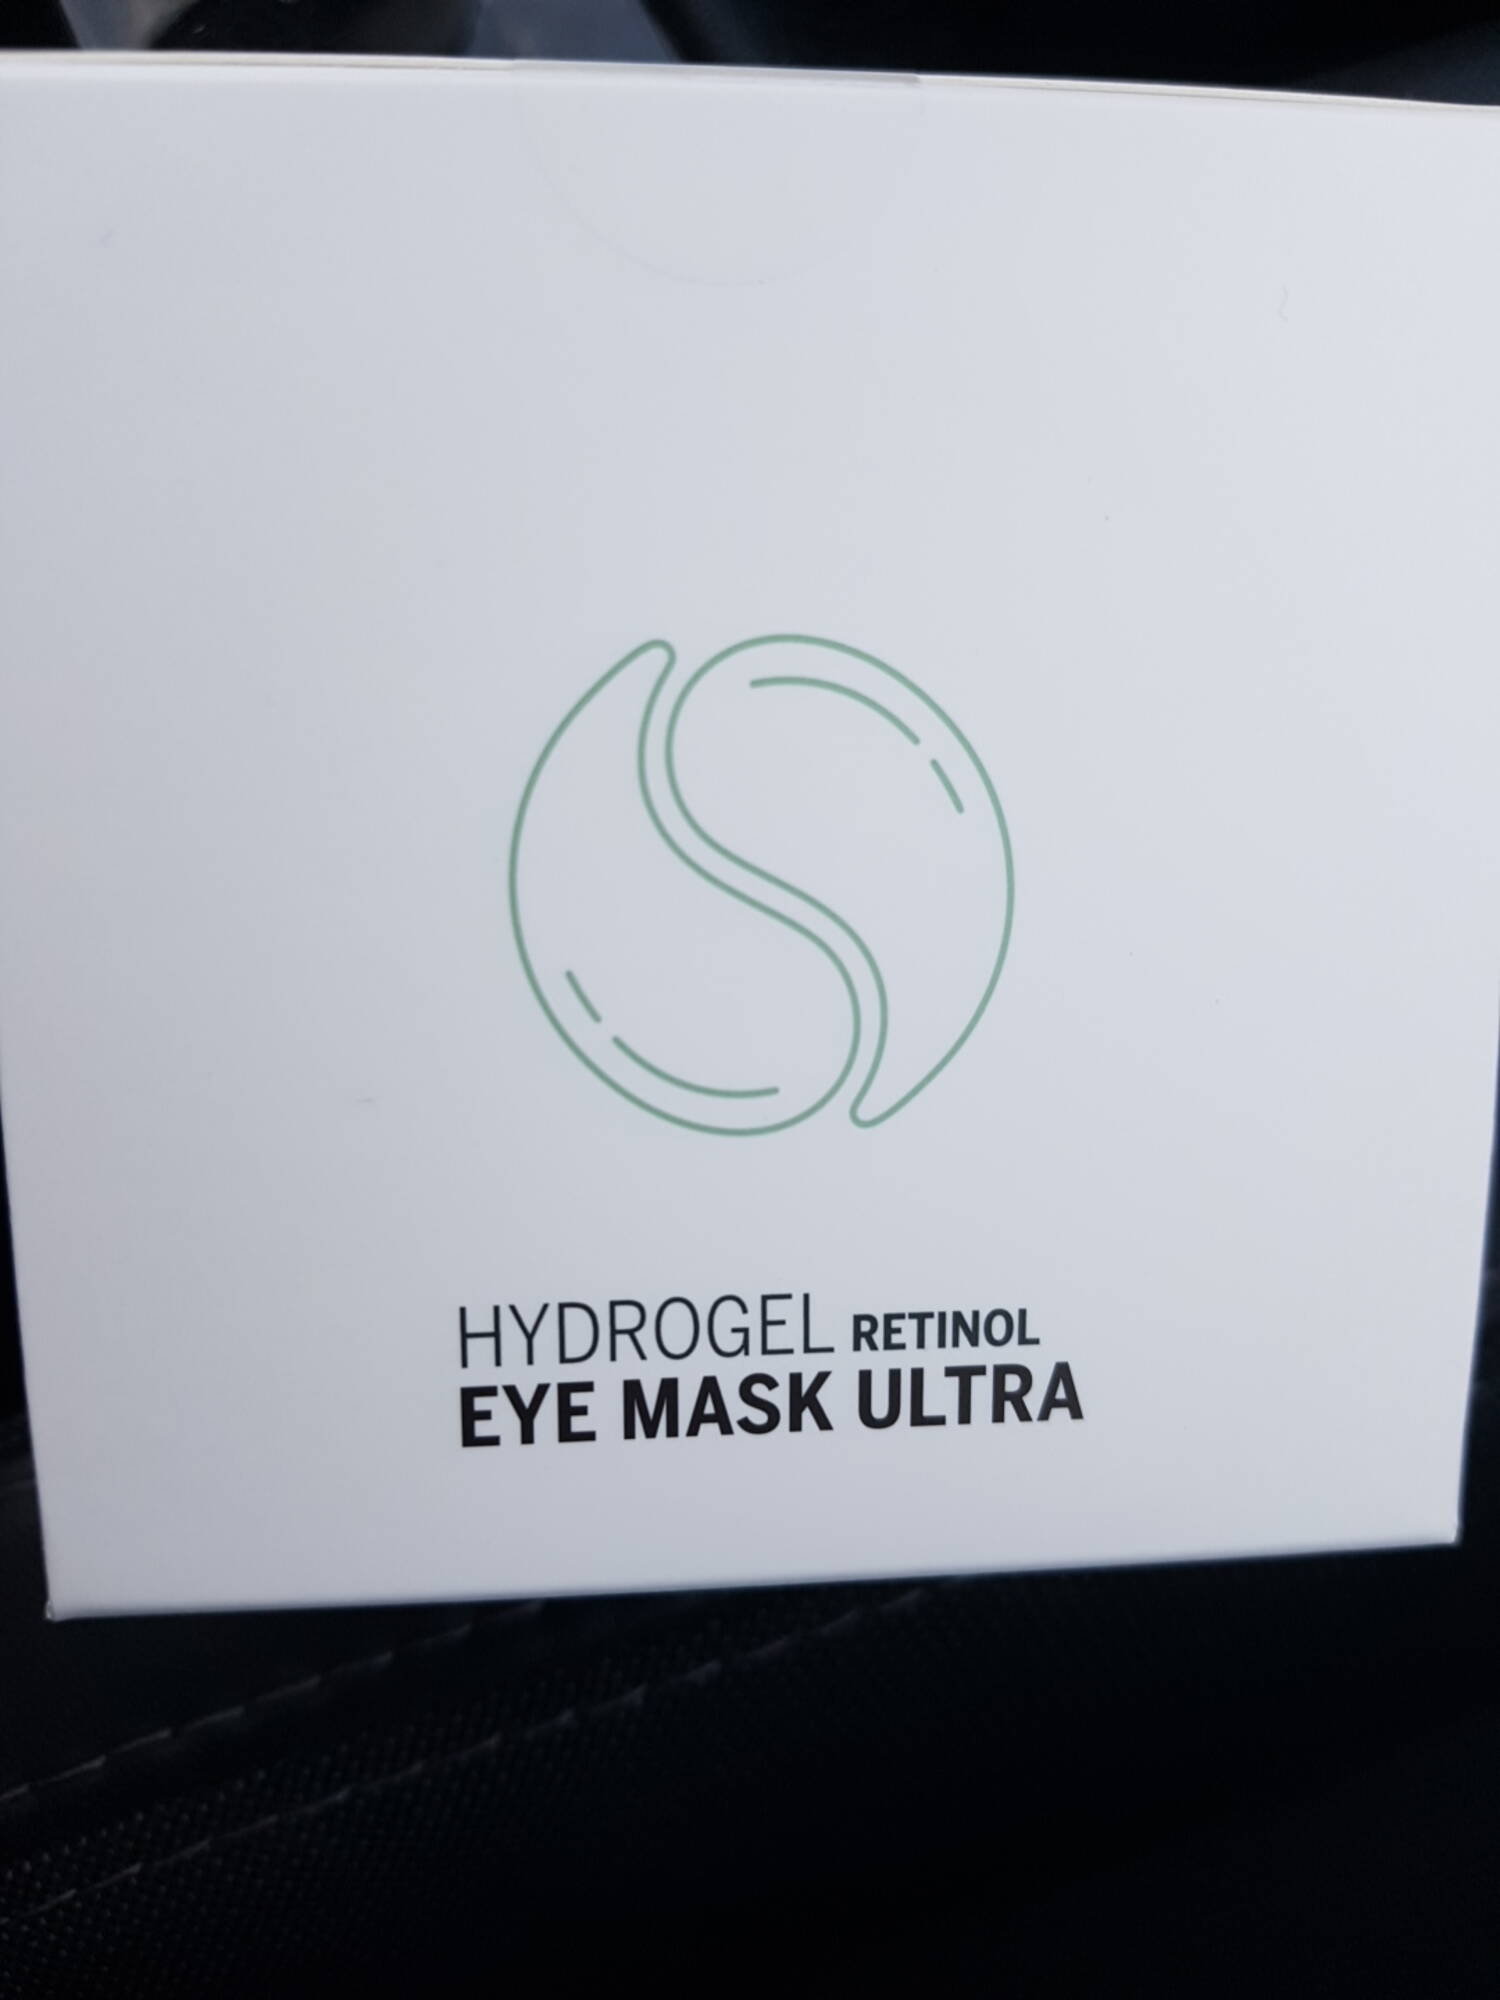 PURE AND CARE - Hydrogel retinol - Eye mask ultra